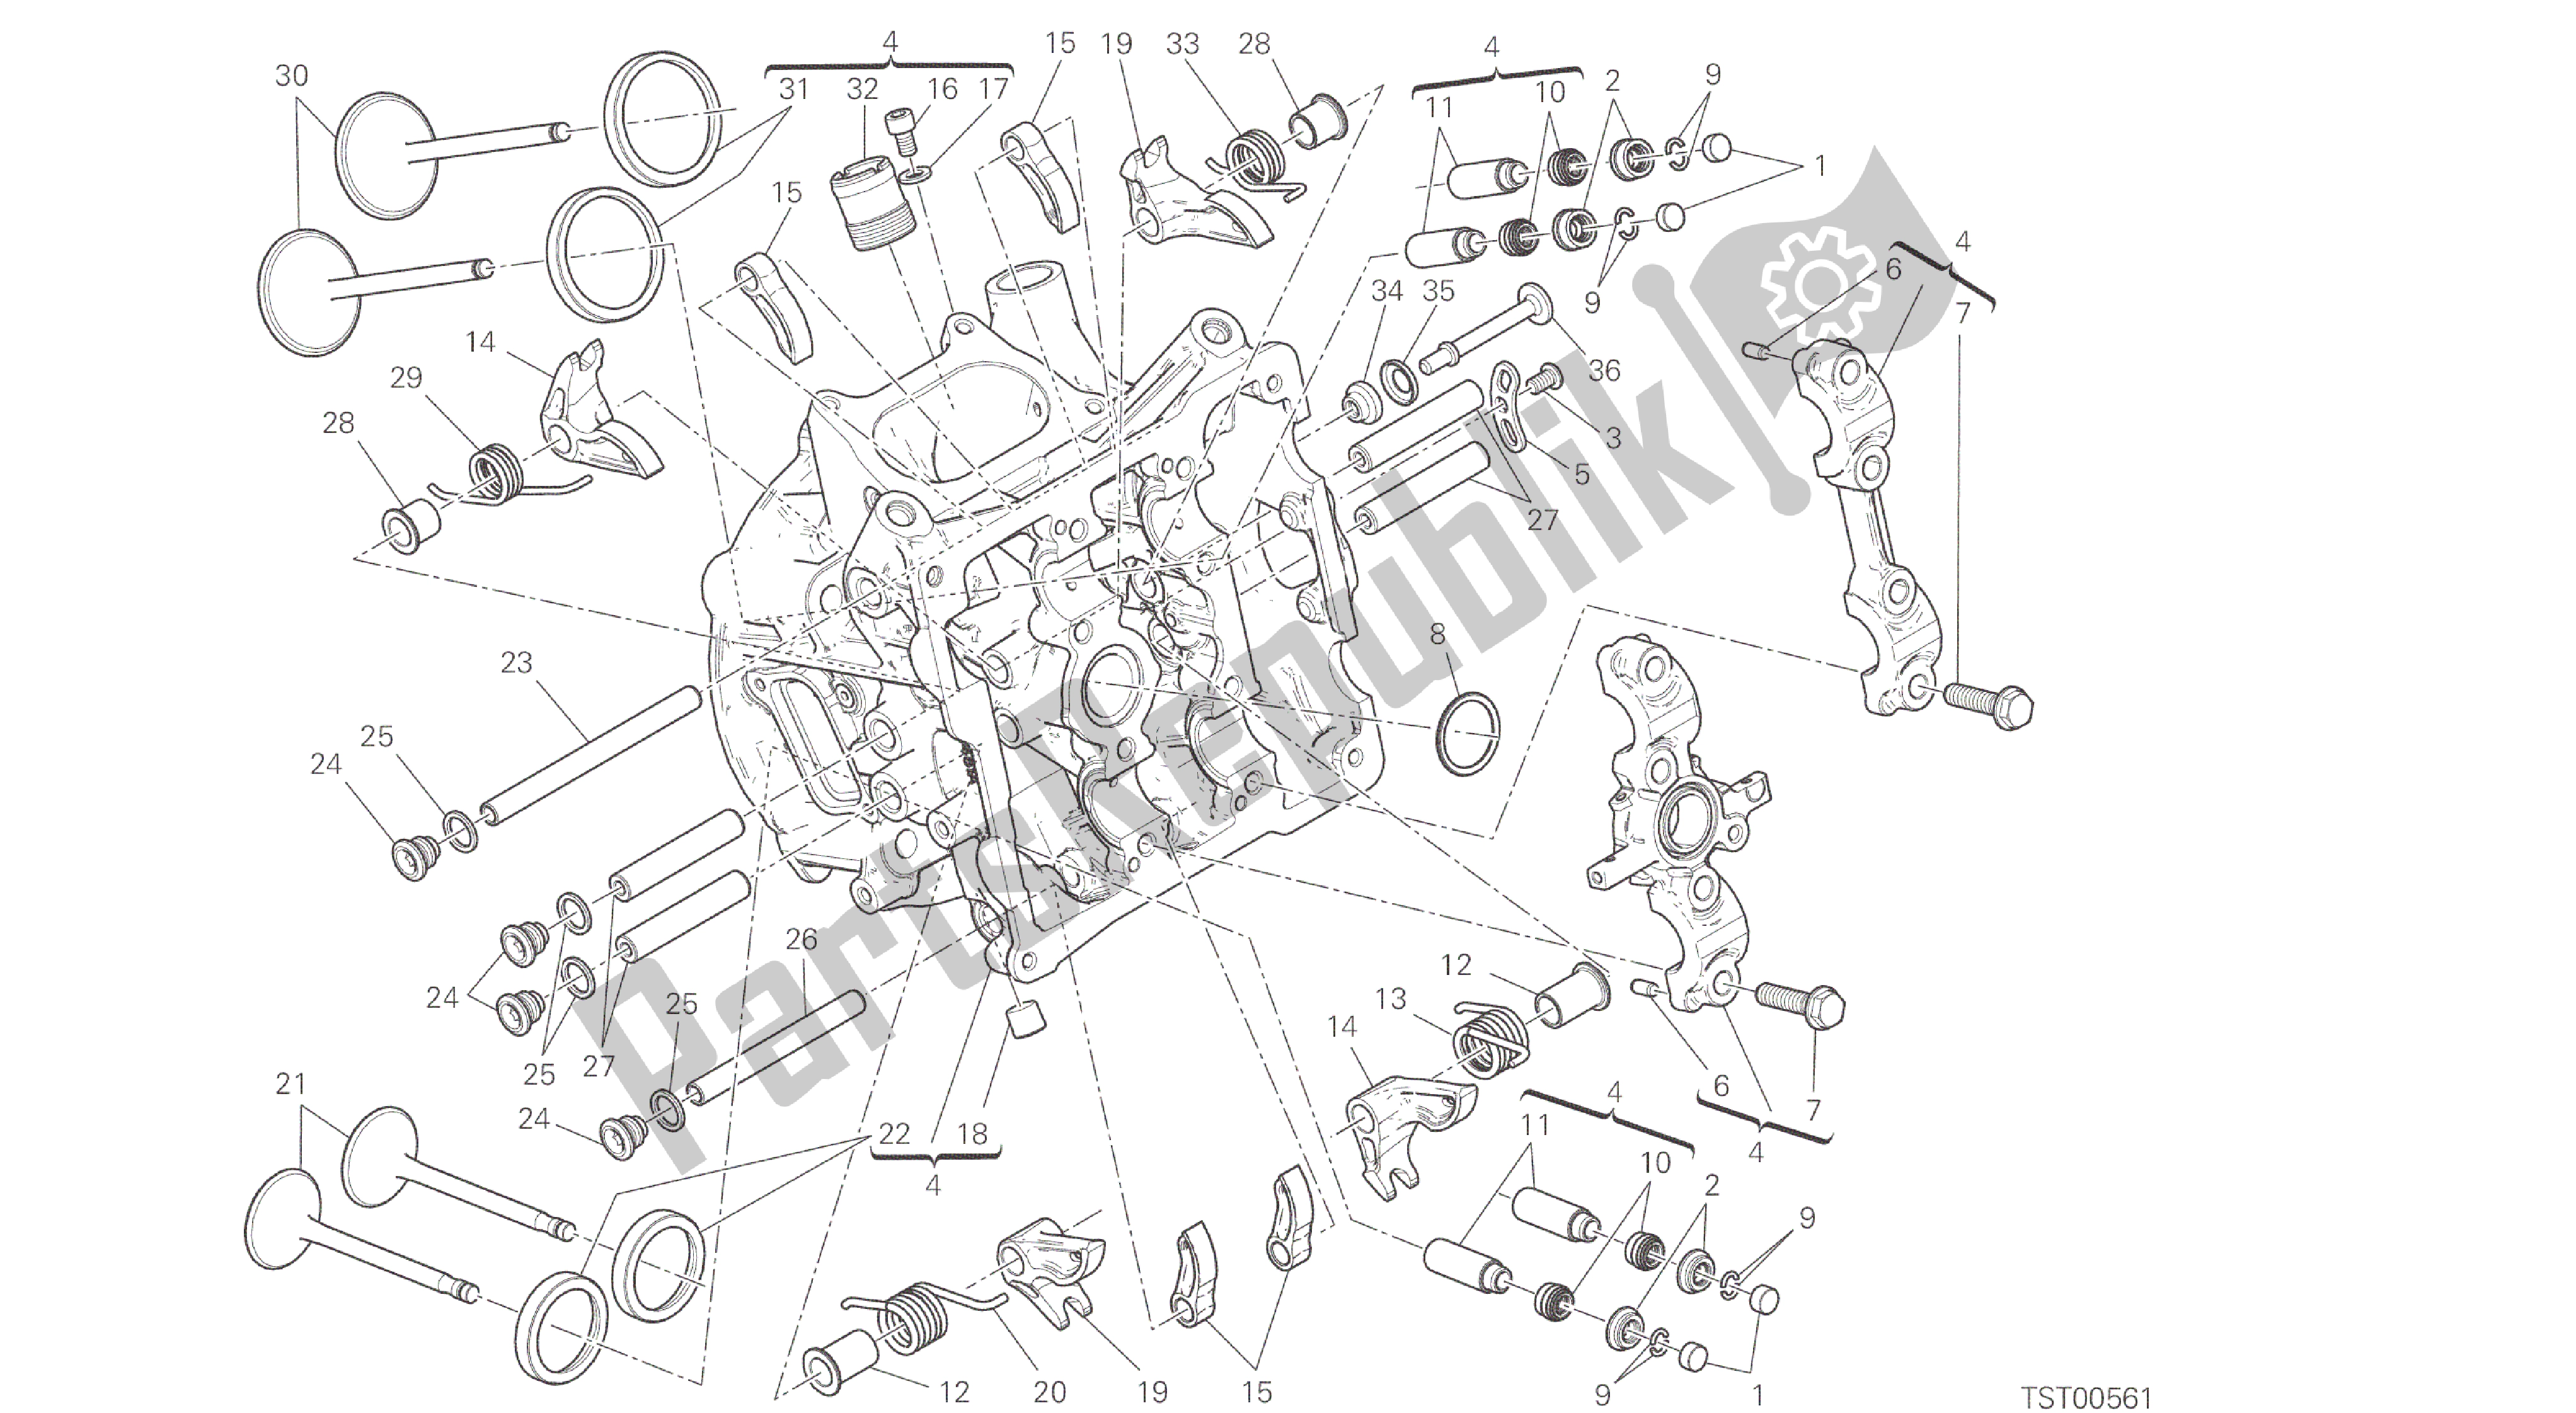 Todas las partes para Dibujo 014 - Motor De Grupo Cabeza Horizontal [mod: 959,959 Aws] de Ducati Panigale 959 2016